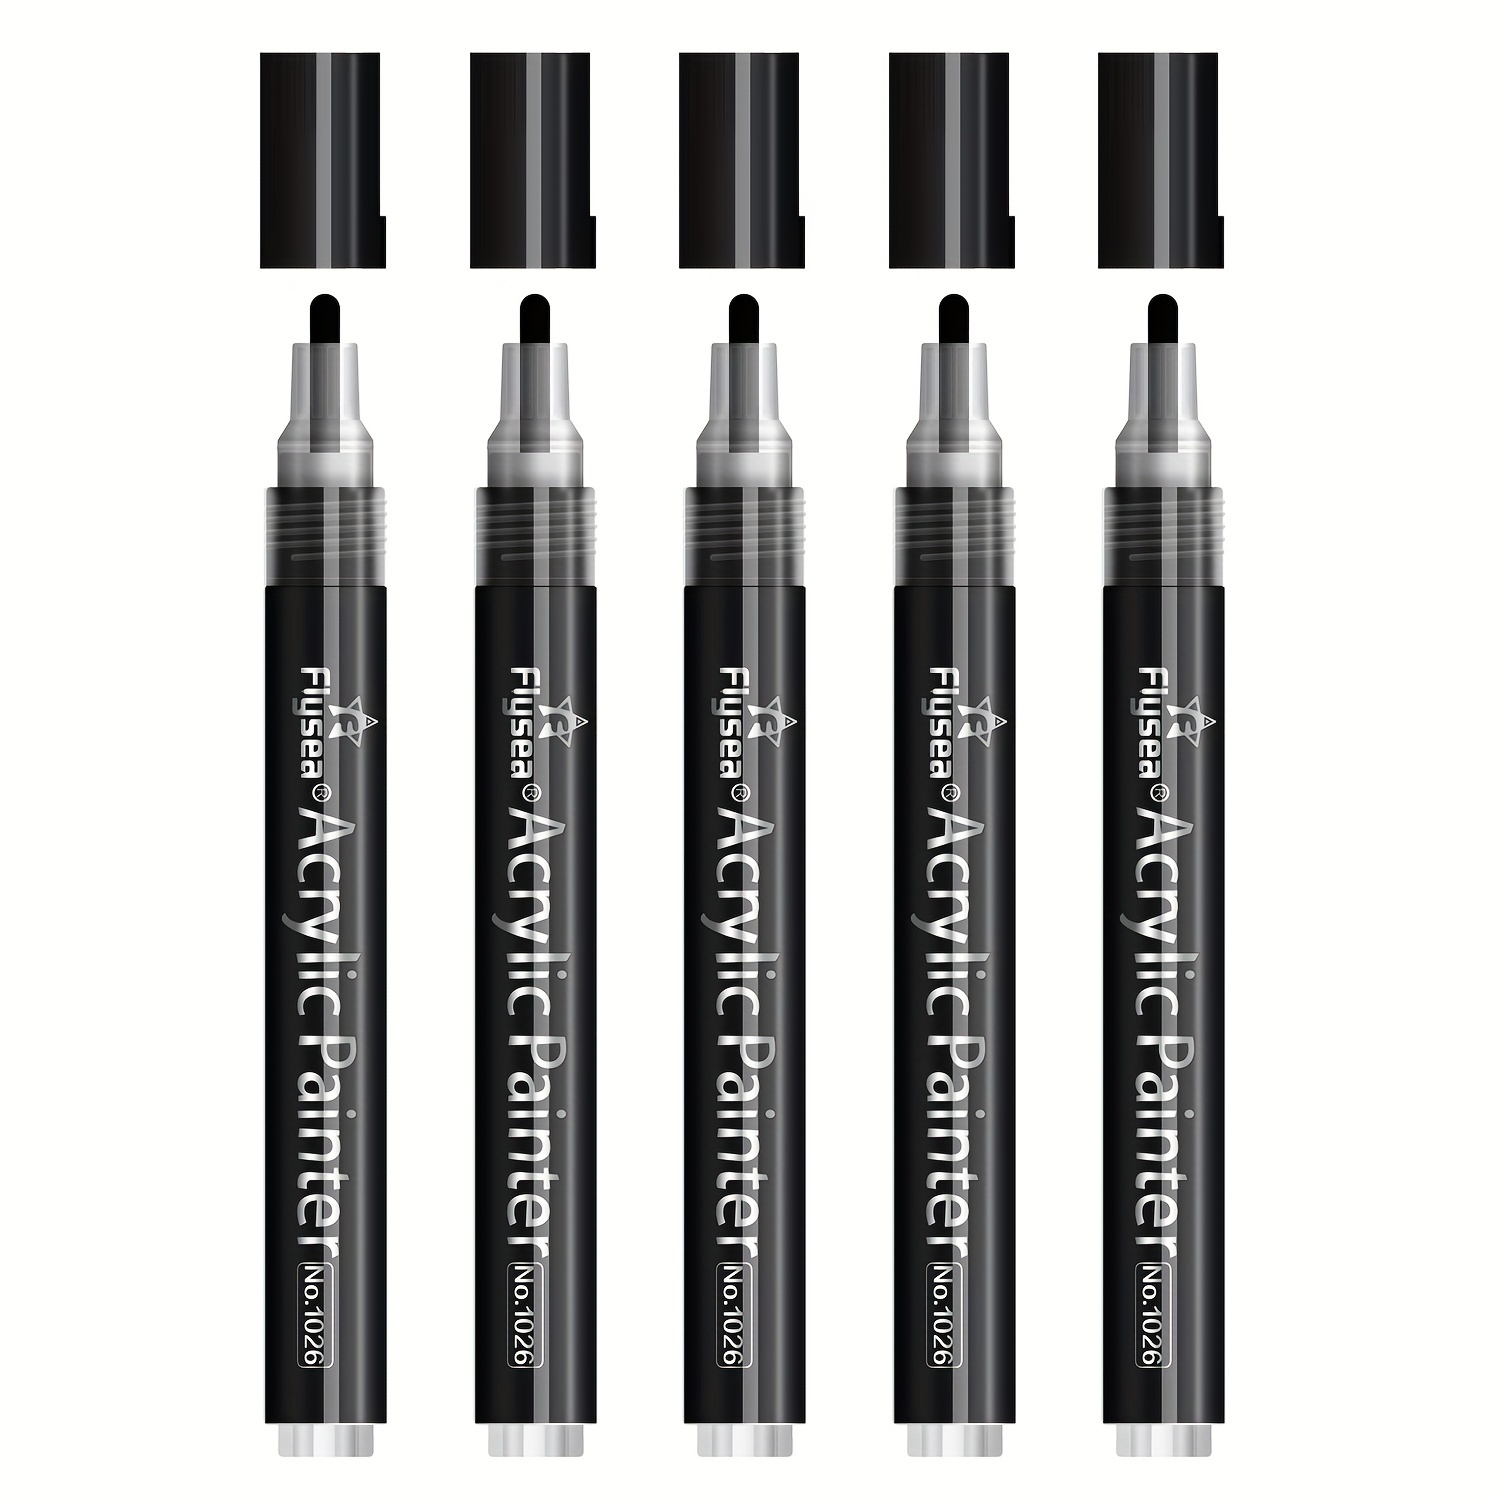 4 Pieces Metallic Marker Pens, Metallic Permanent Paint Pen Markers  Painting Pens Suitable for Black Paper Glass Signature Cards Scrapbook  Artist